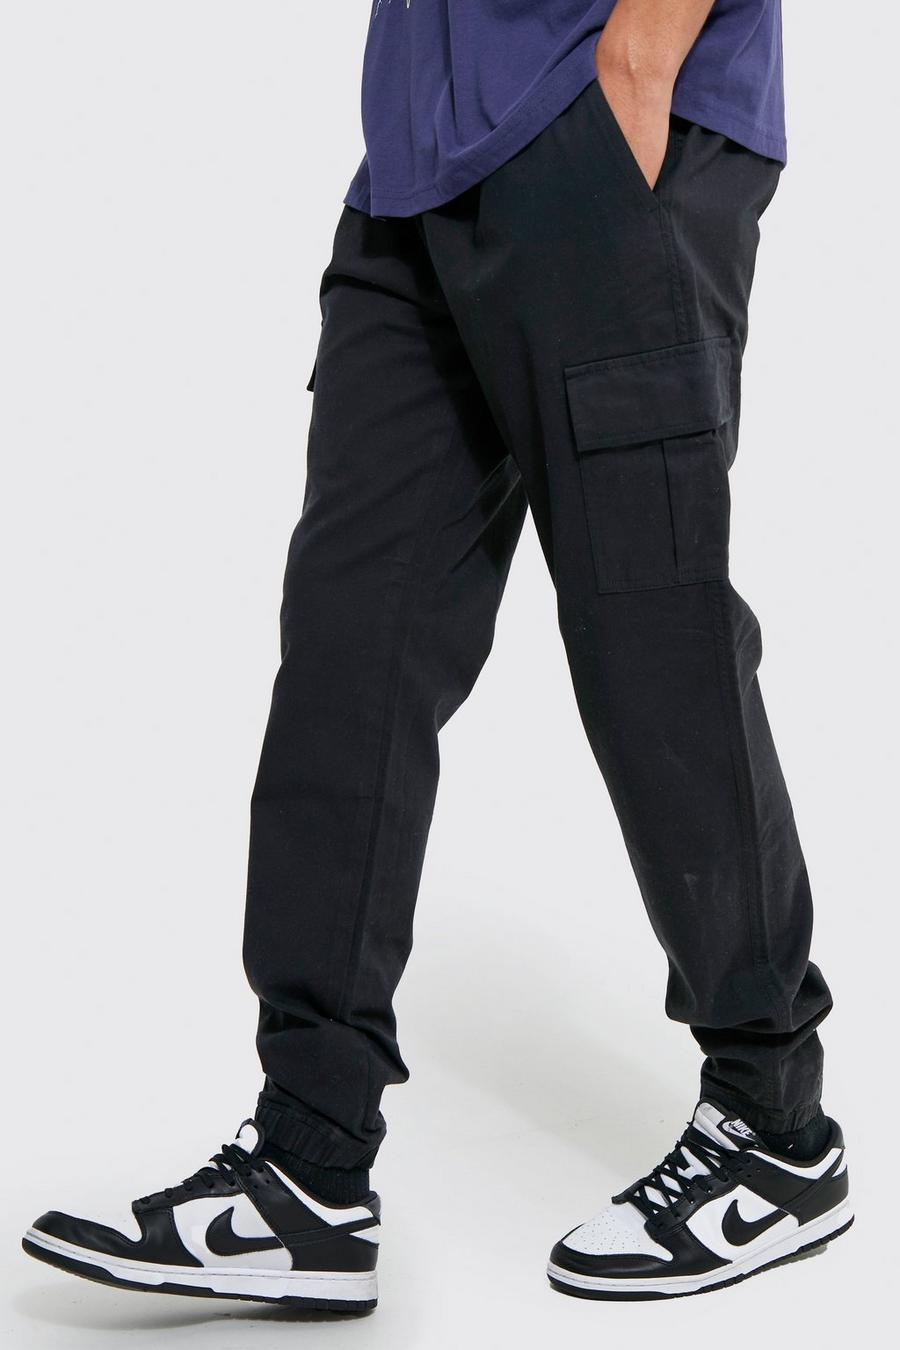 Pantaloni Cargo Tall Slim Fit, Black nero